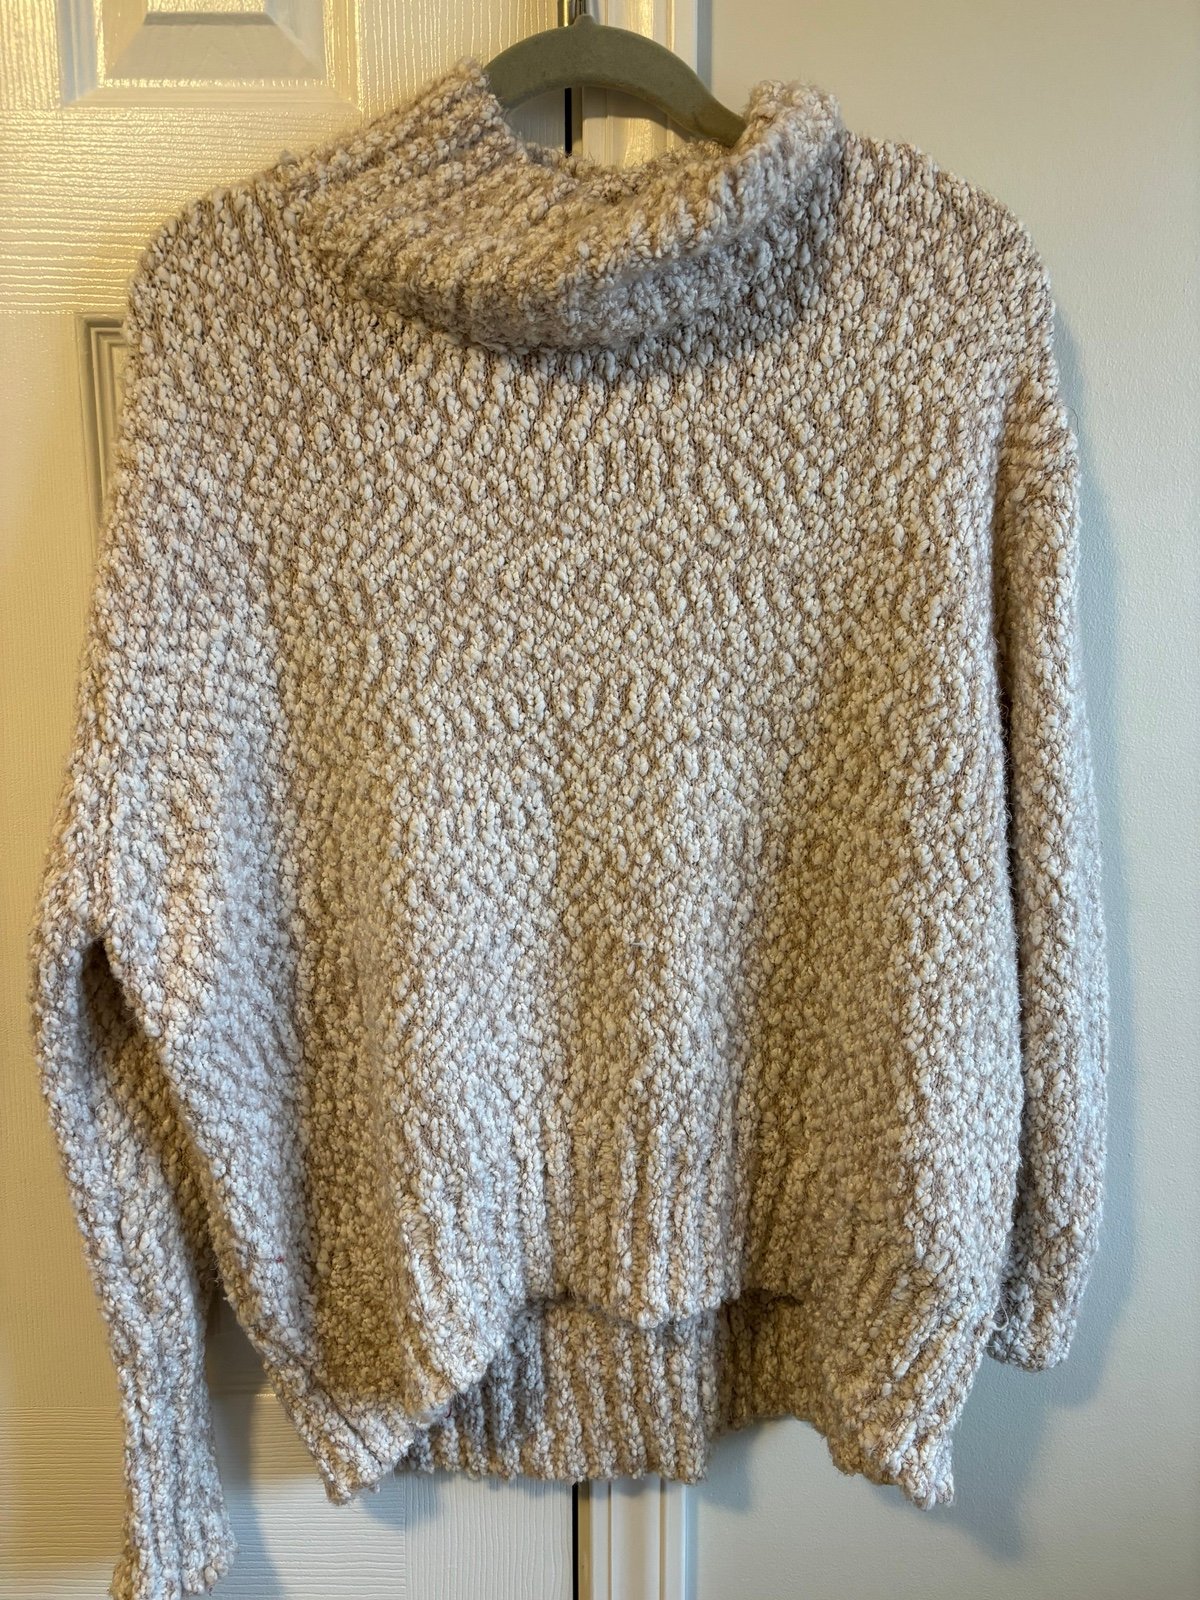 Buy Cynthia rowley sweater itsyeSvGe Low Price